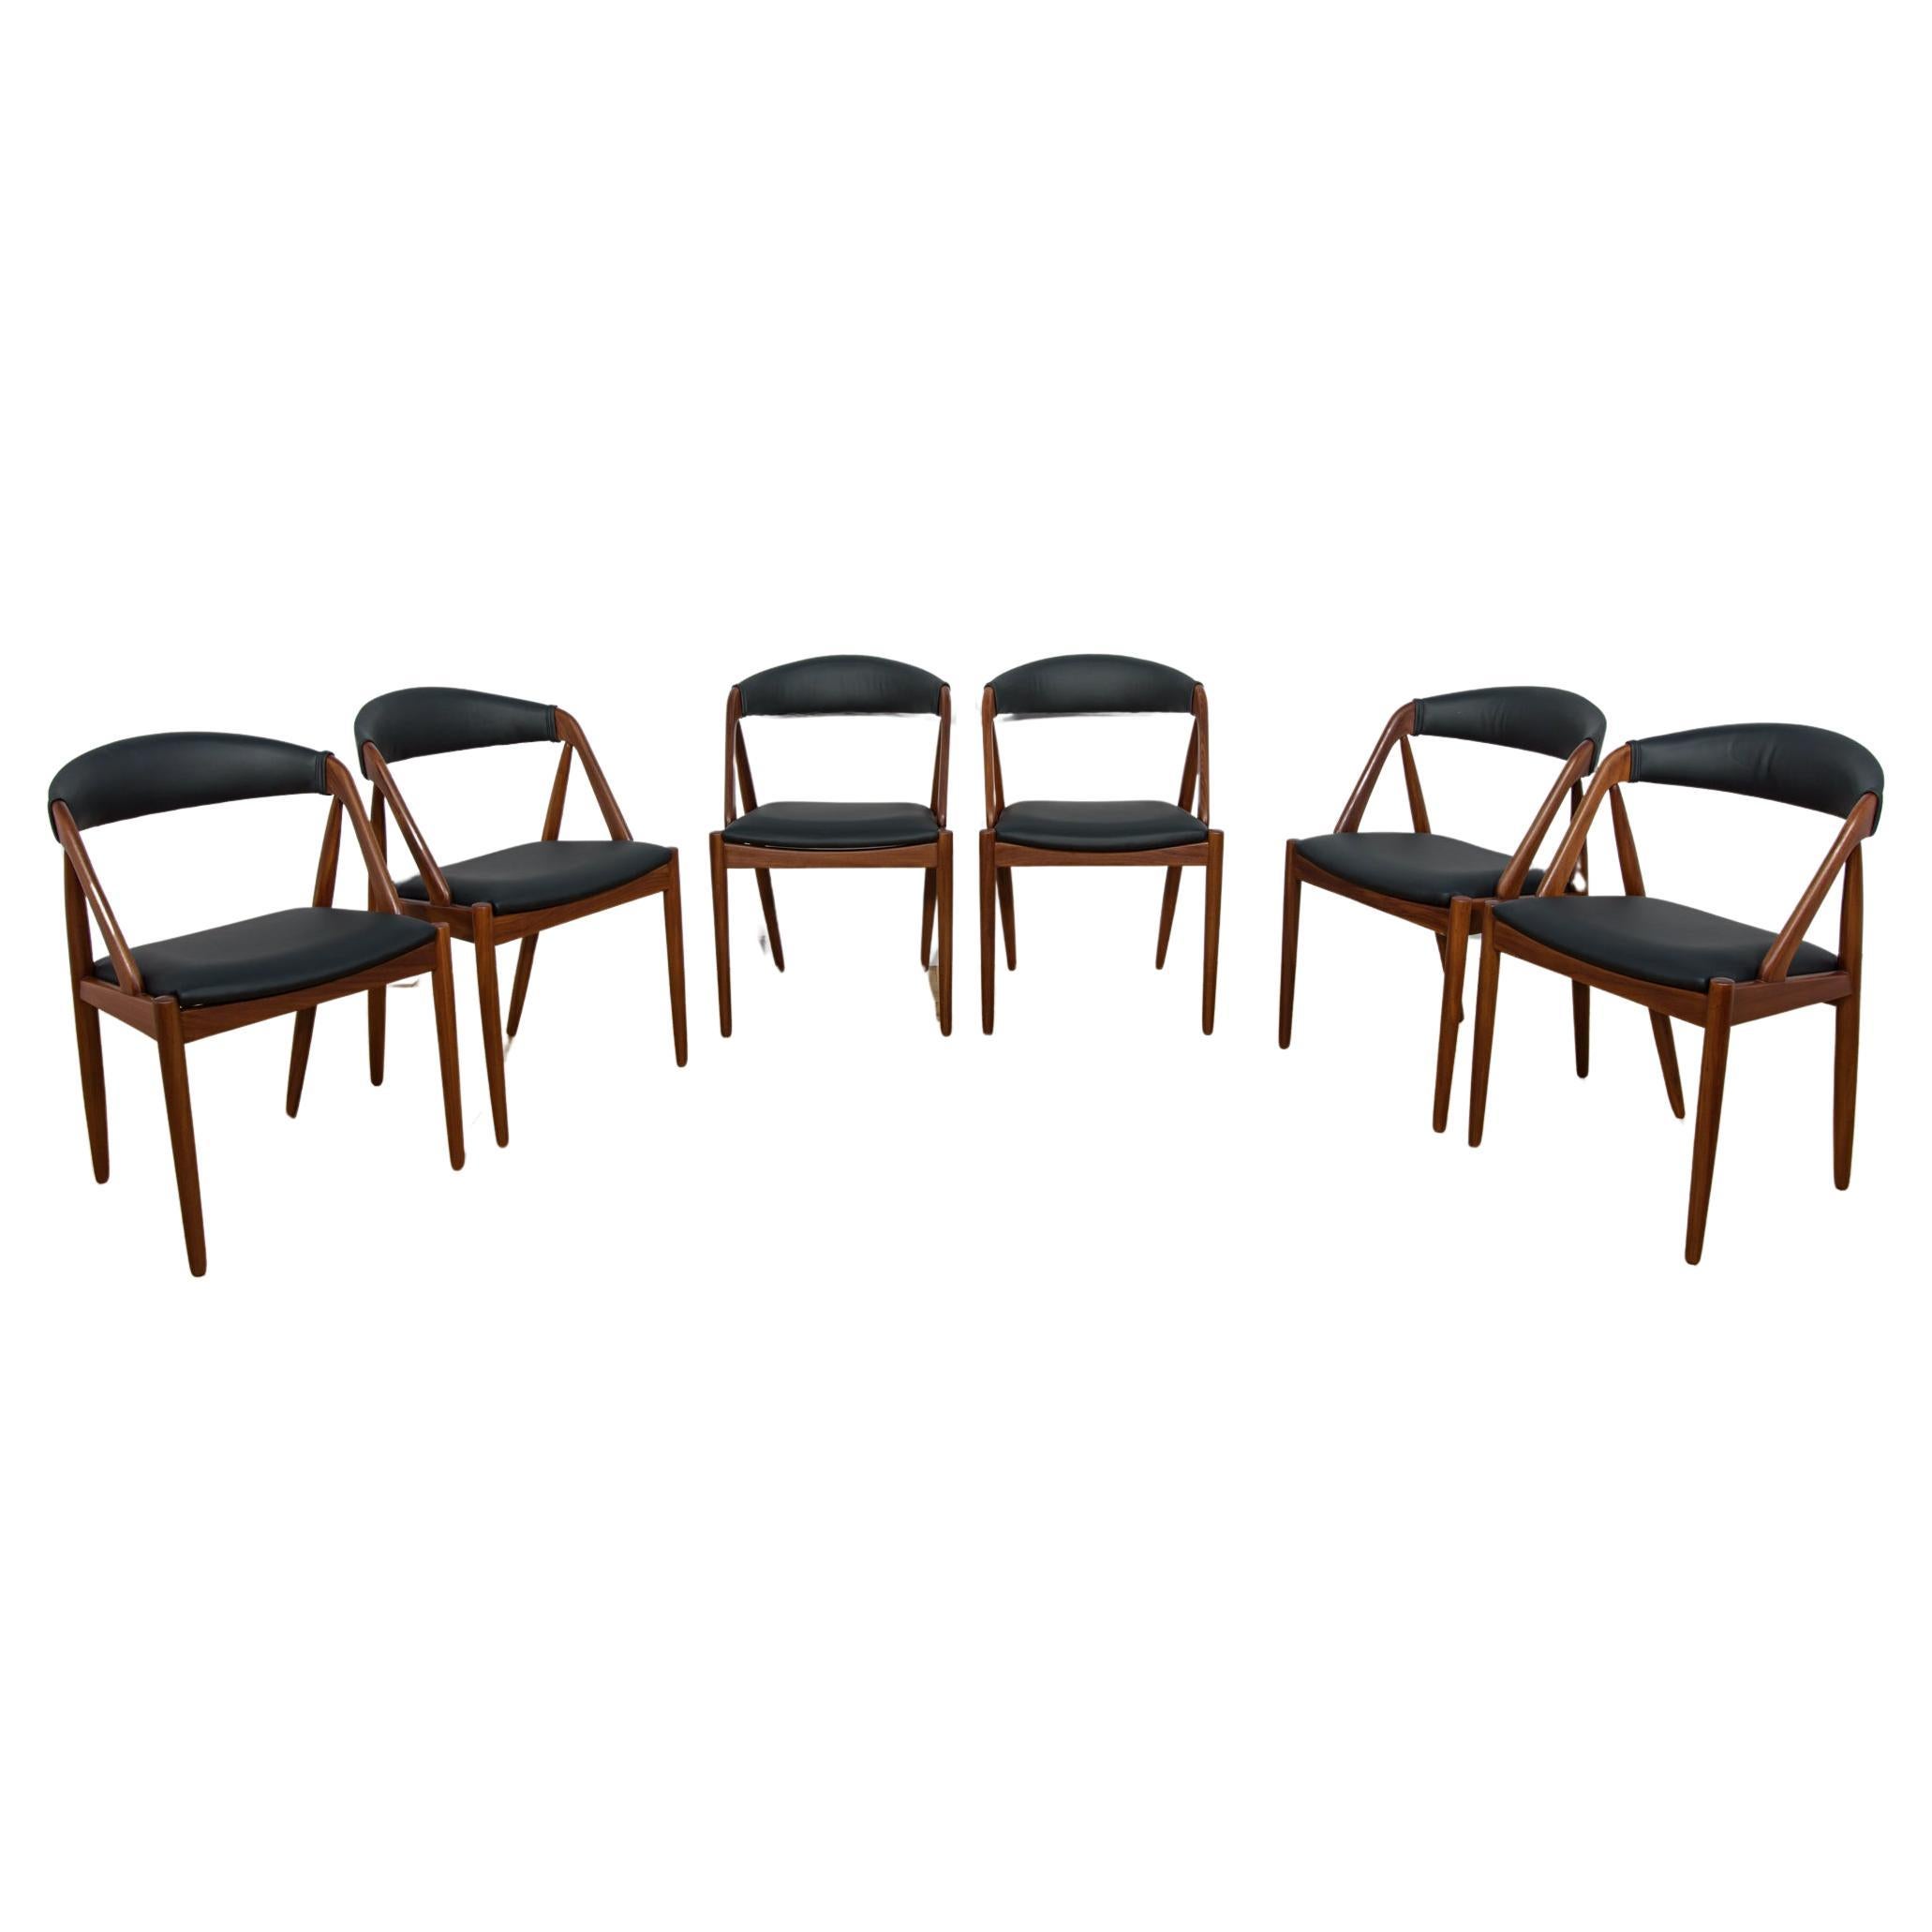 Model 31 Dining Chairs by Kai Kristiansen for Schou Andersen, Denmark, 1960s.